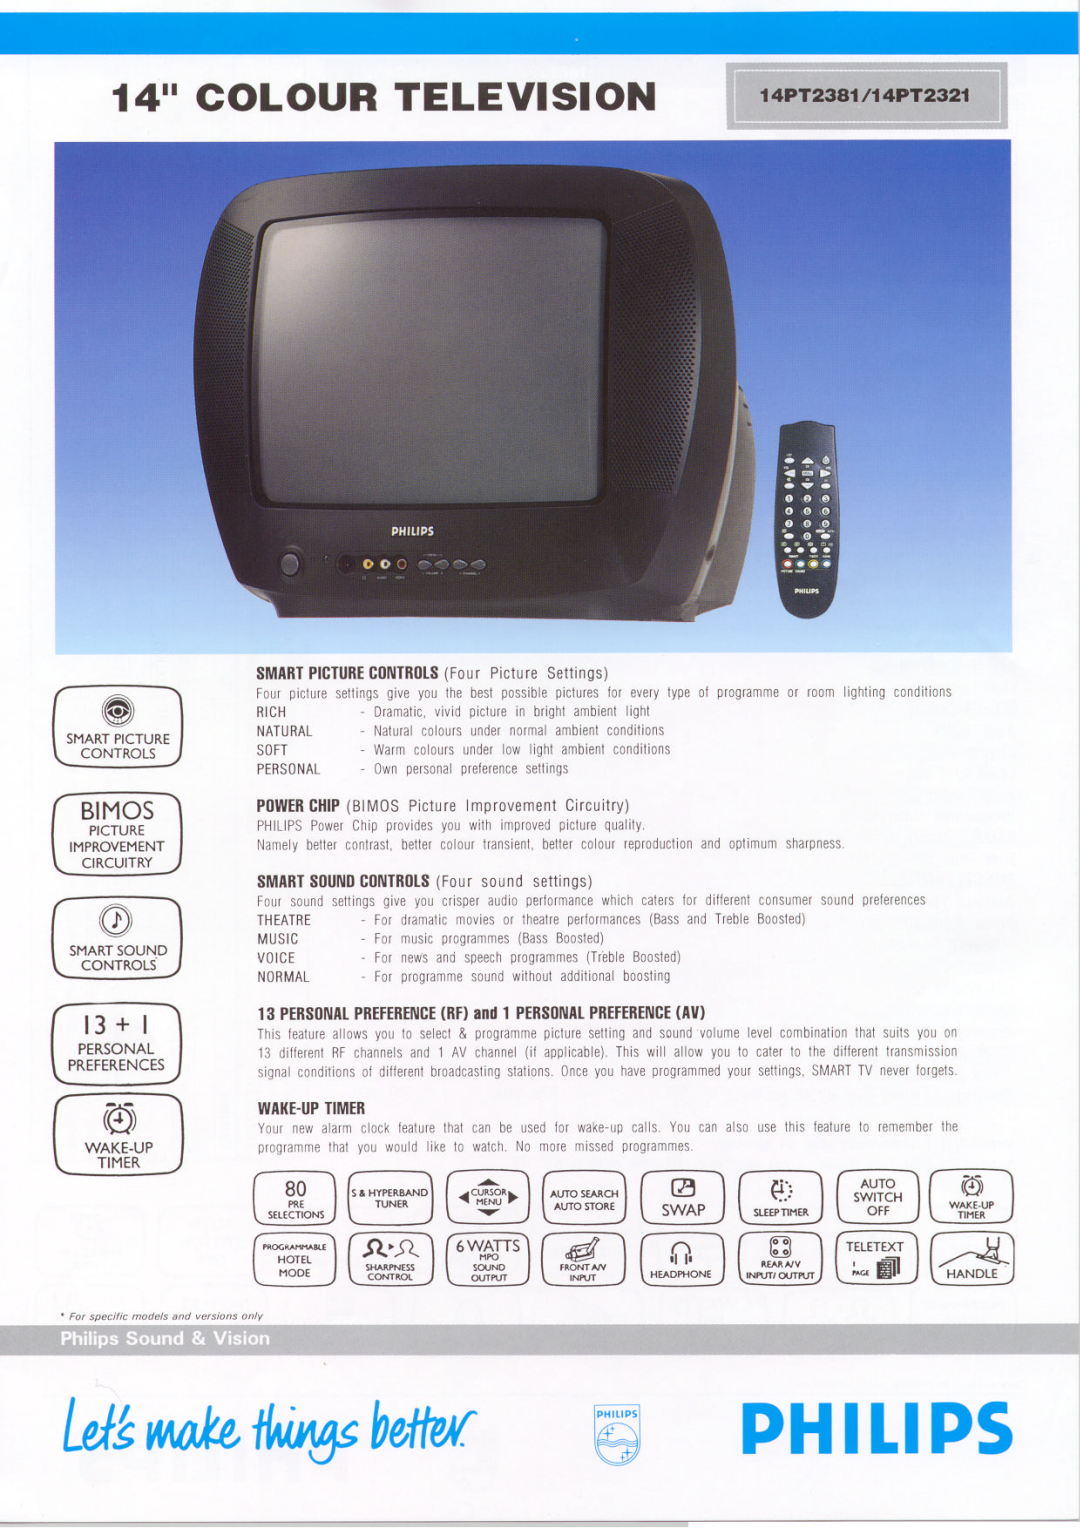 Philips 14PT2321, 14PT2381 manual 